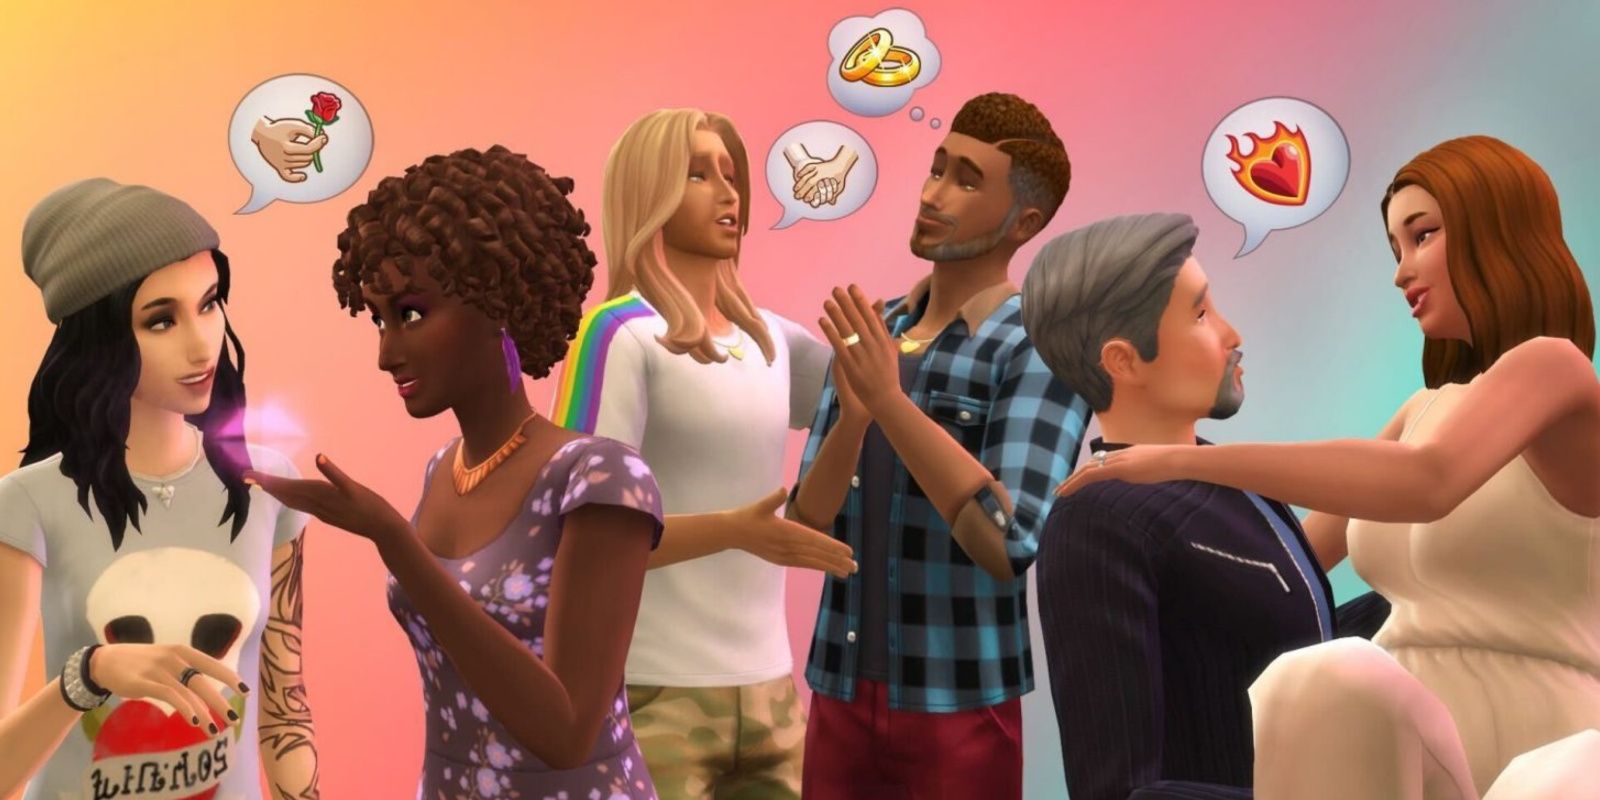 Three Sim couples interacting romantically